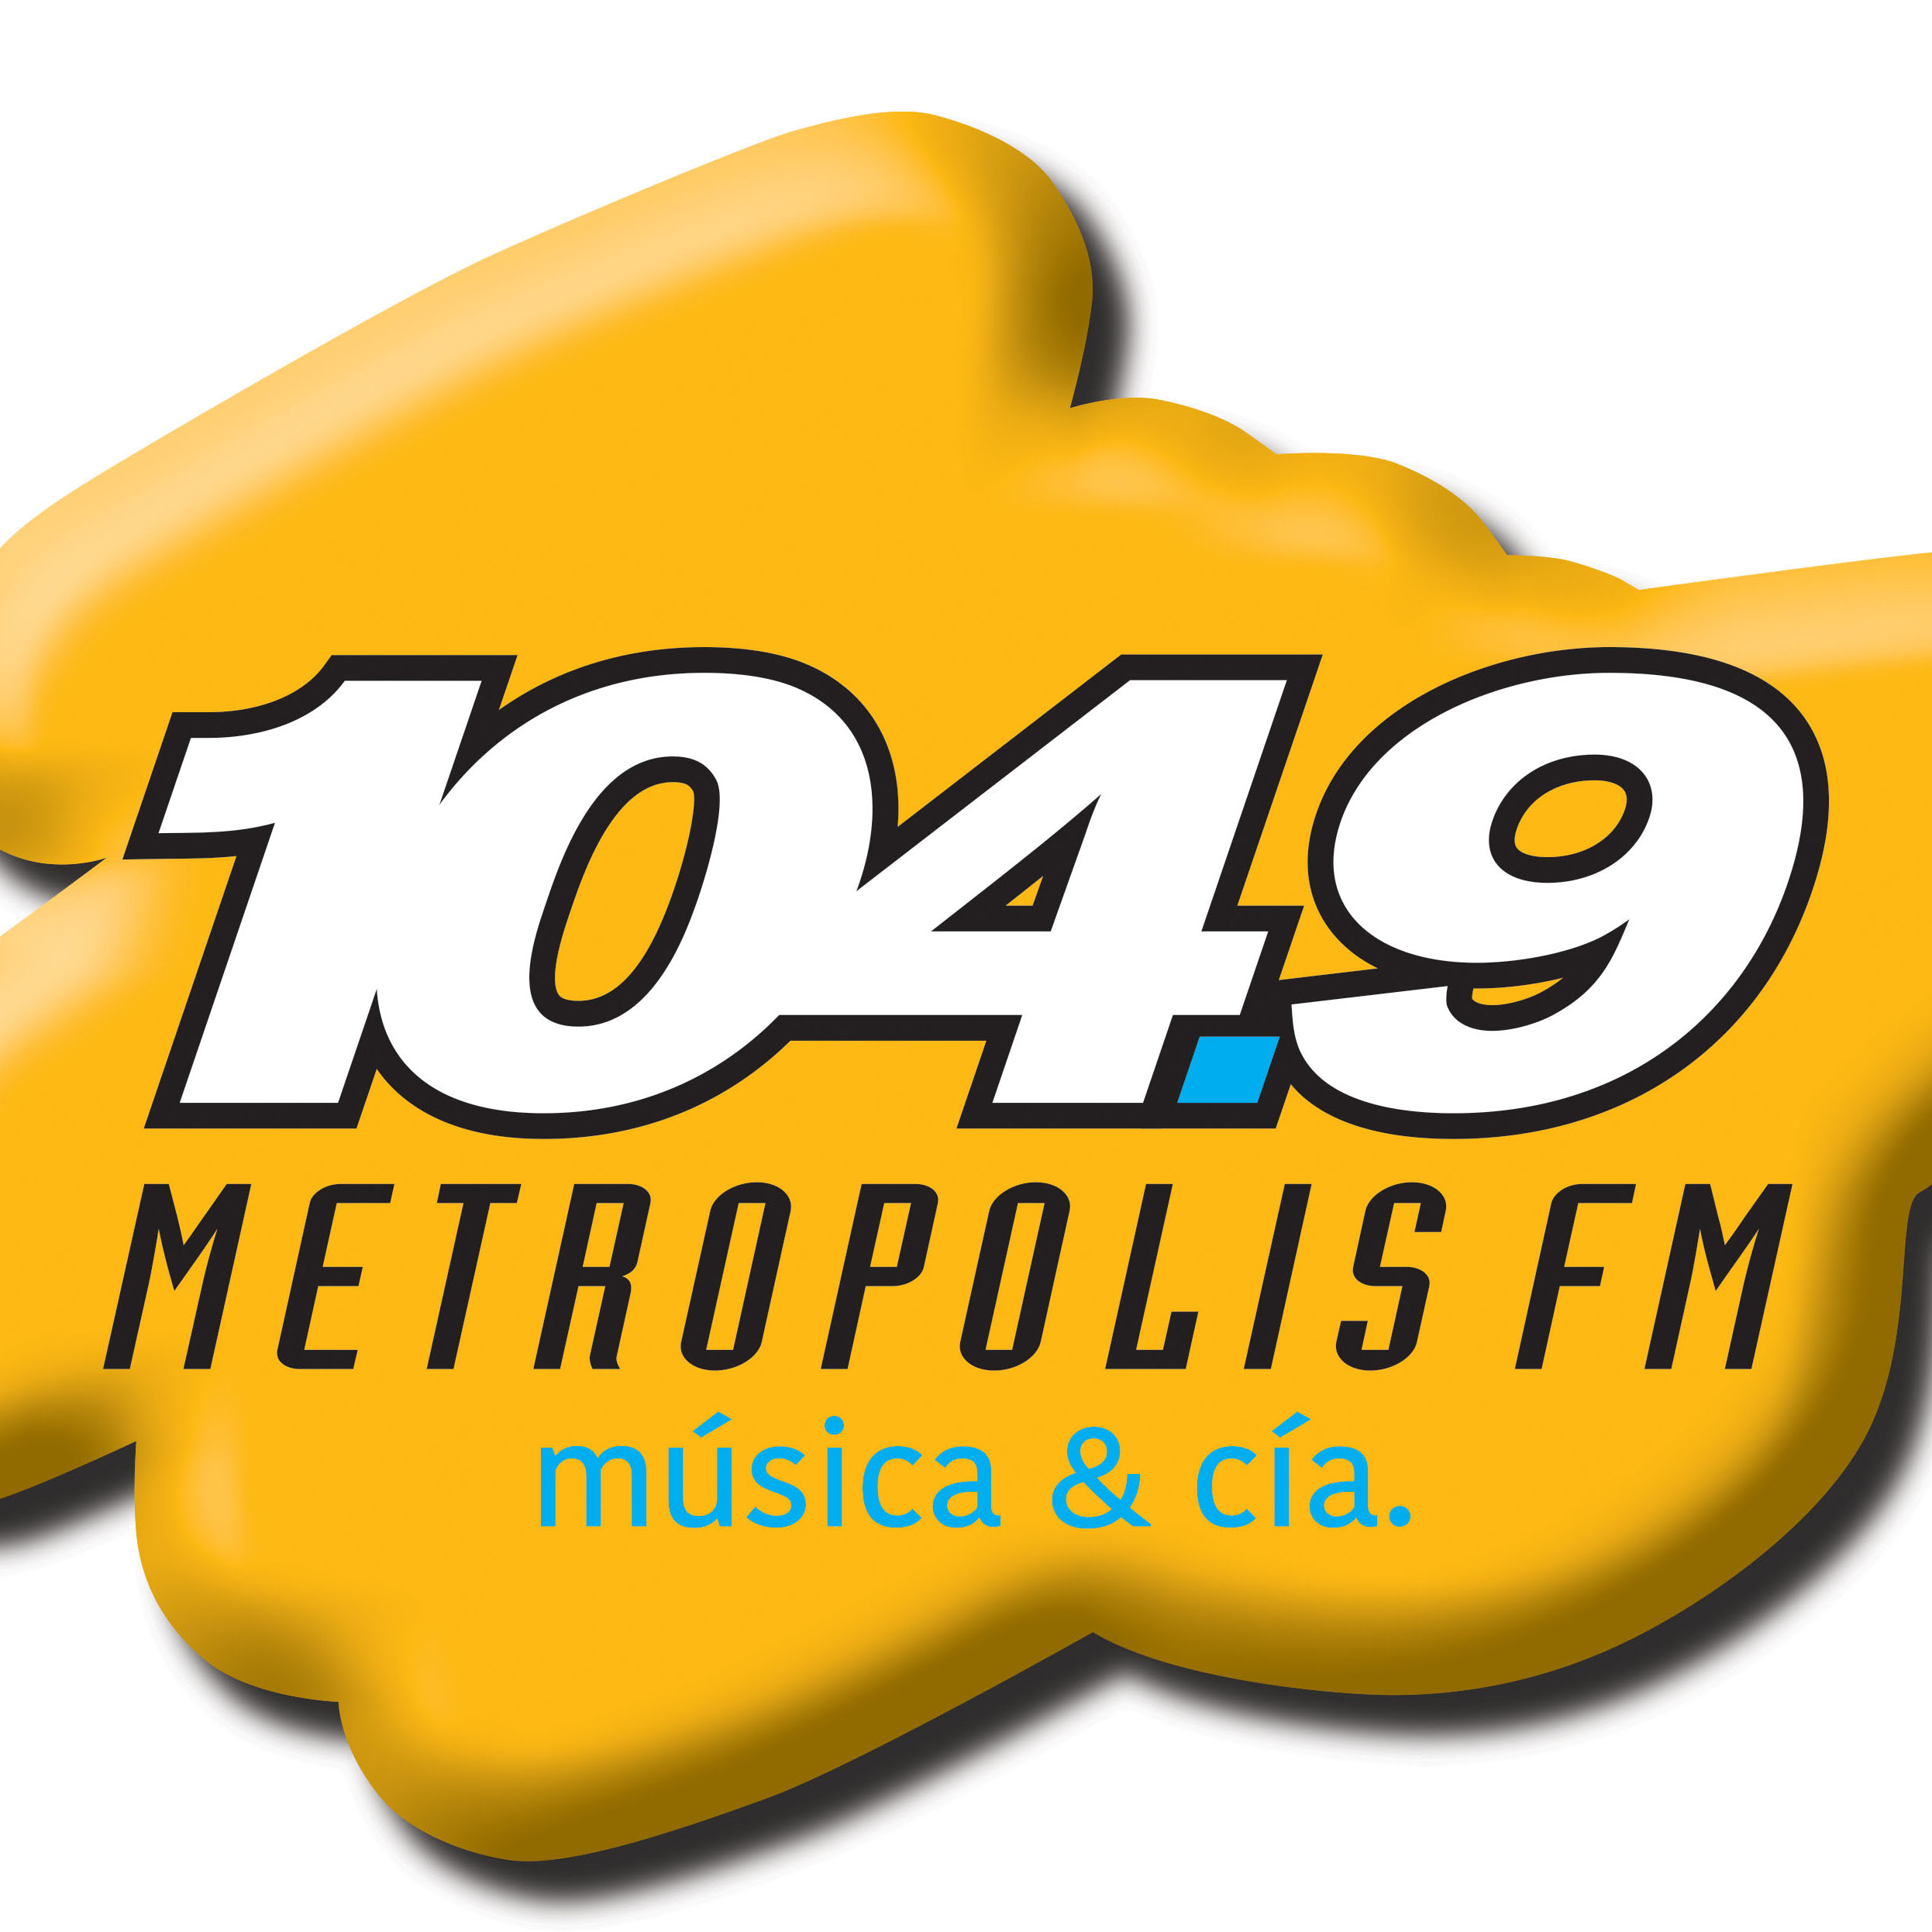 MetropolisFM